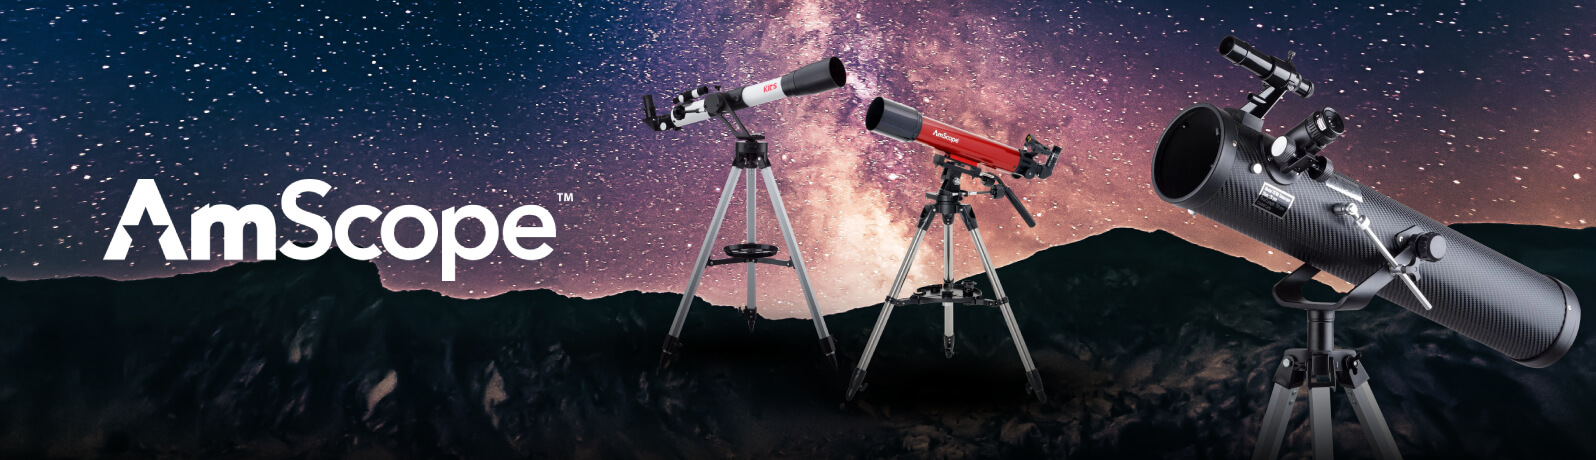 AmScope telescopes